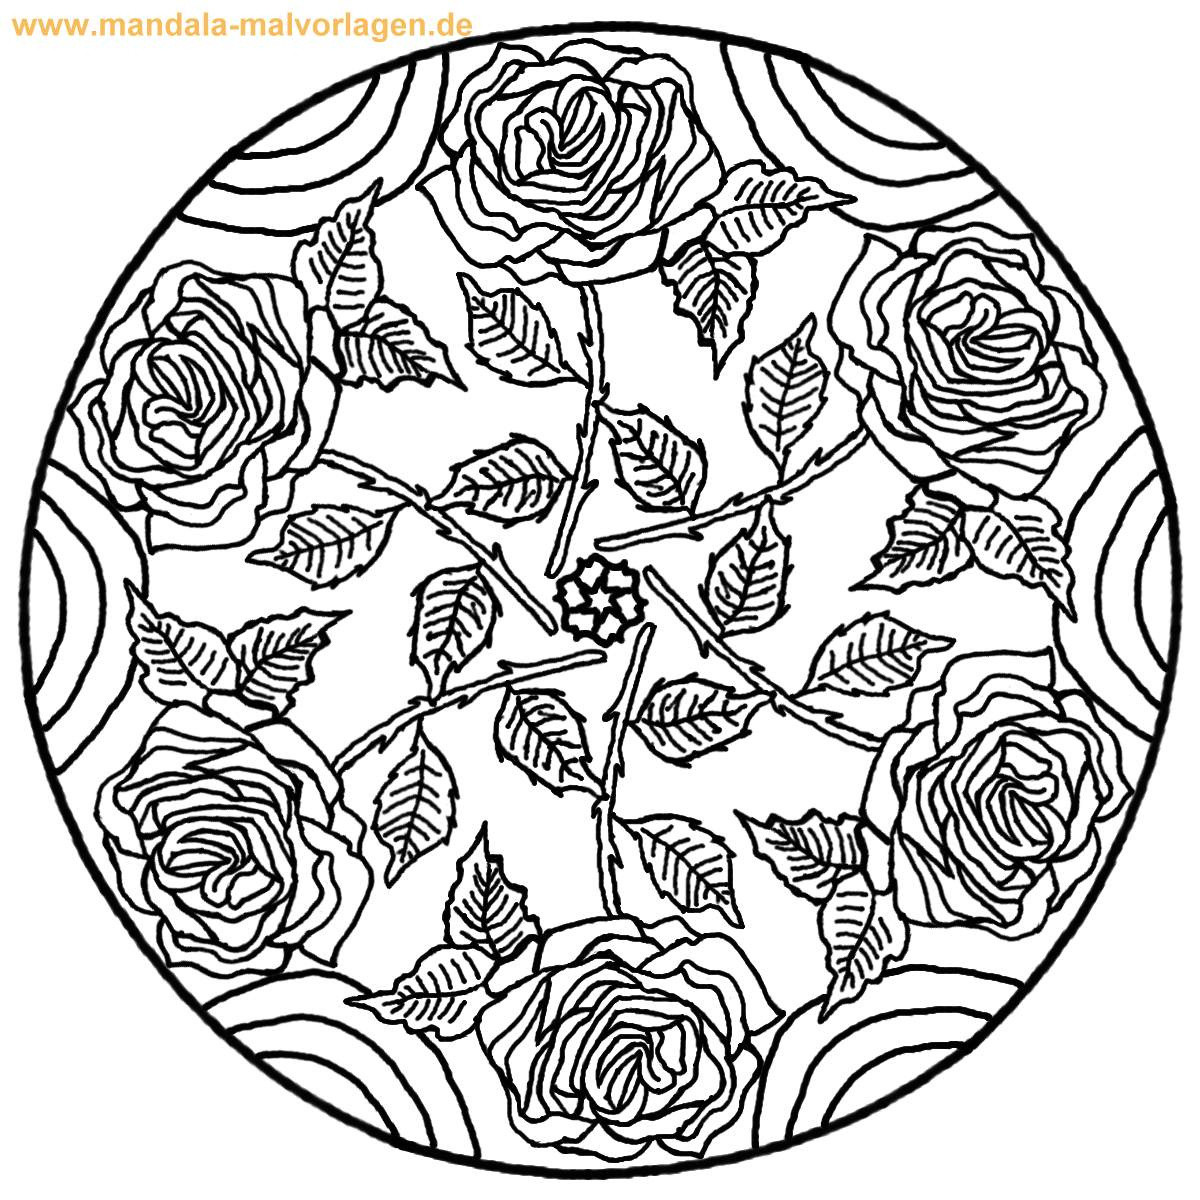 Ausmalbilder Blumen Mandala
 malvorlagen mandalas kostenlos ausdrucken